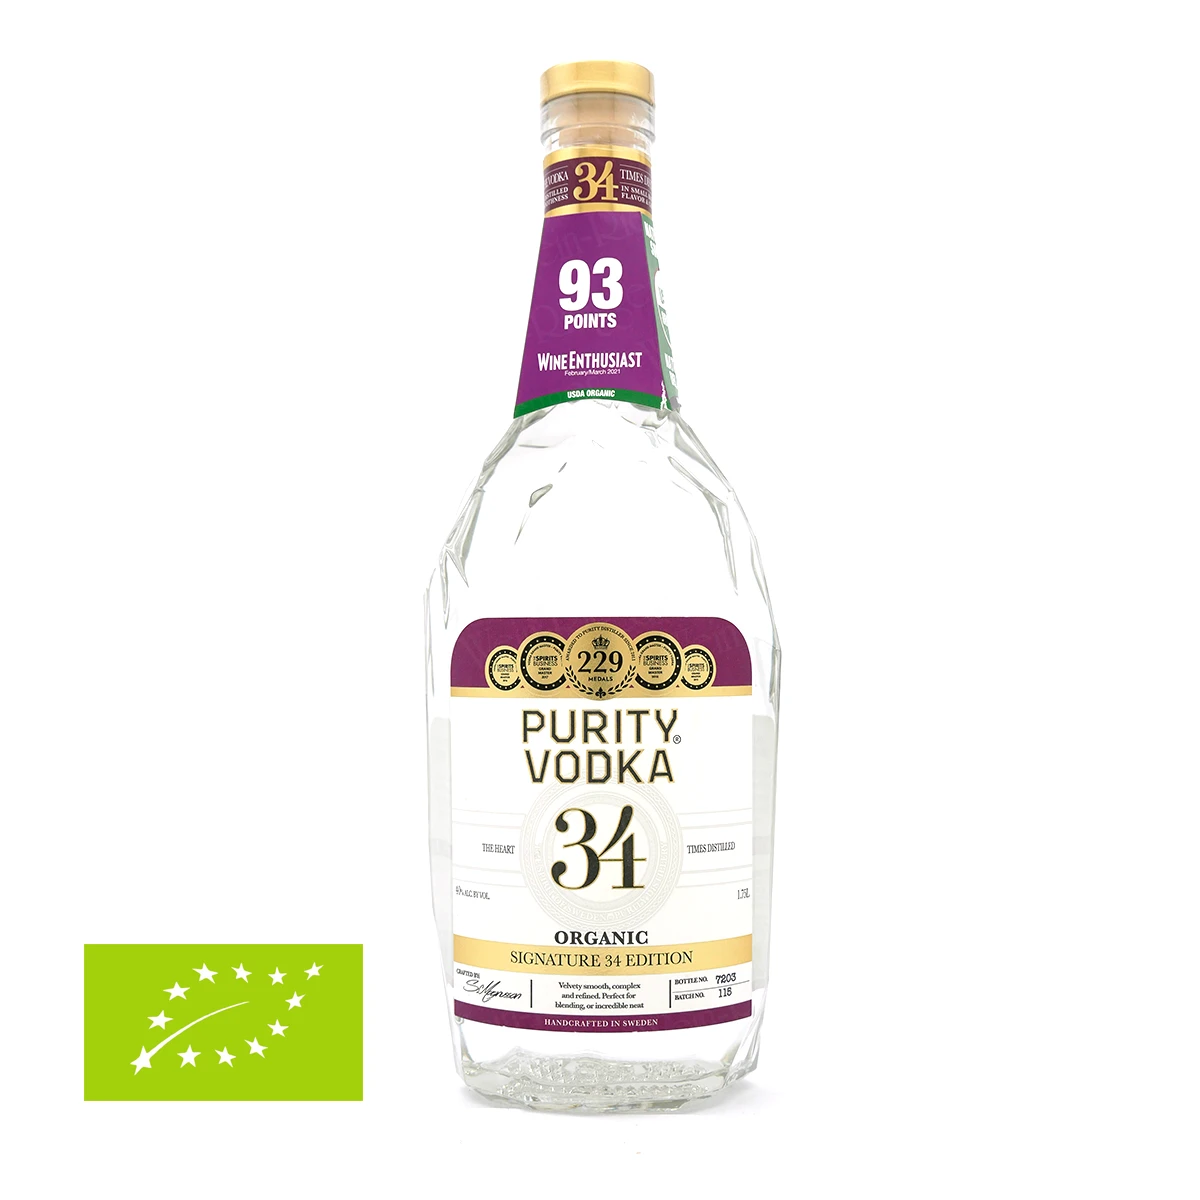 Purity Vodka SIGNATURE 34 EDITION Organic